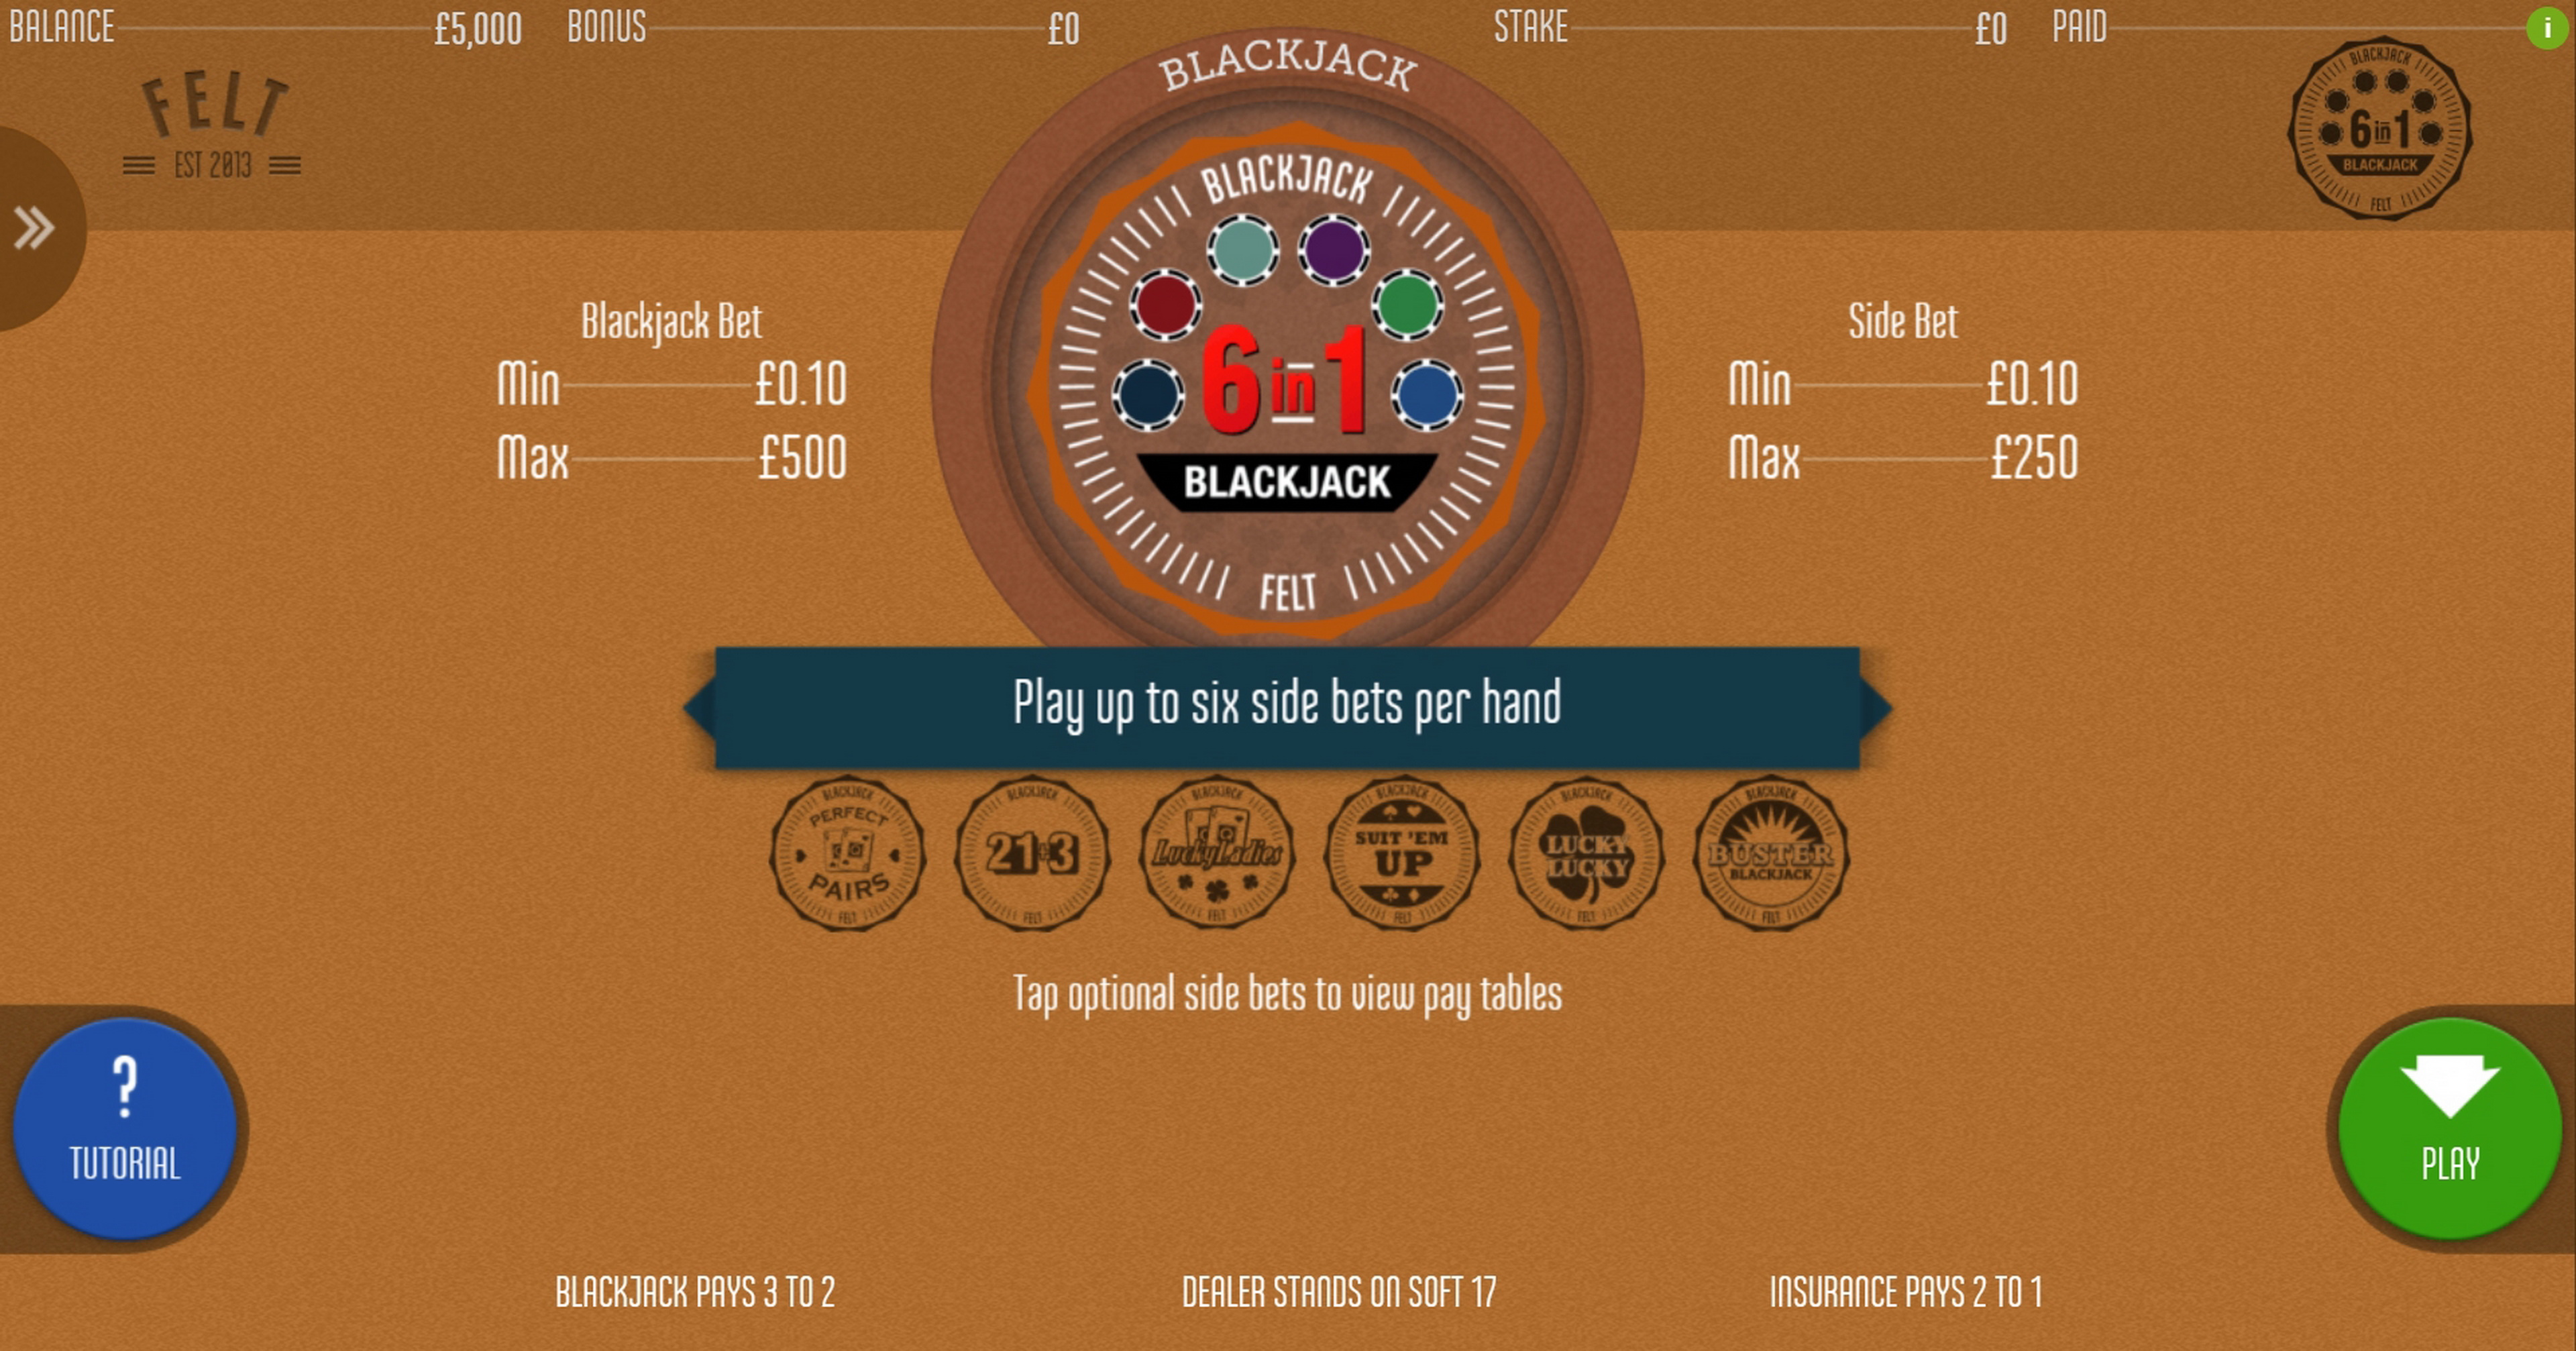 Play 6 in 1 Blackjack Free Casino Slot Game by Felt